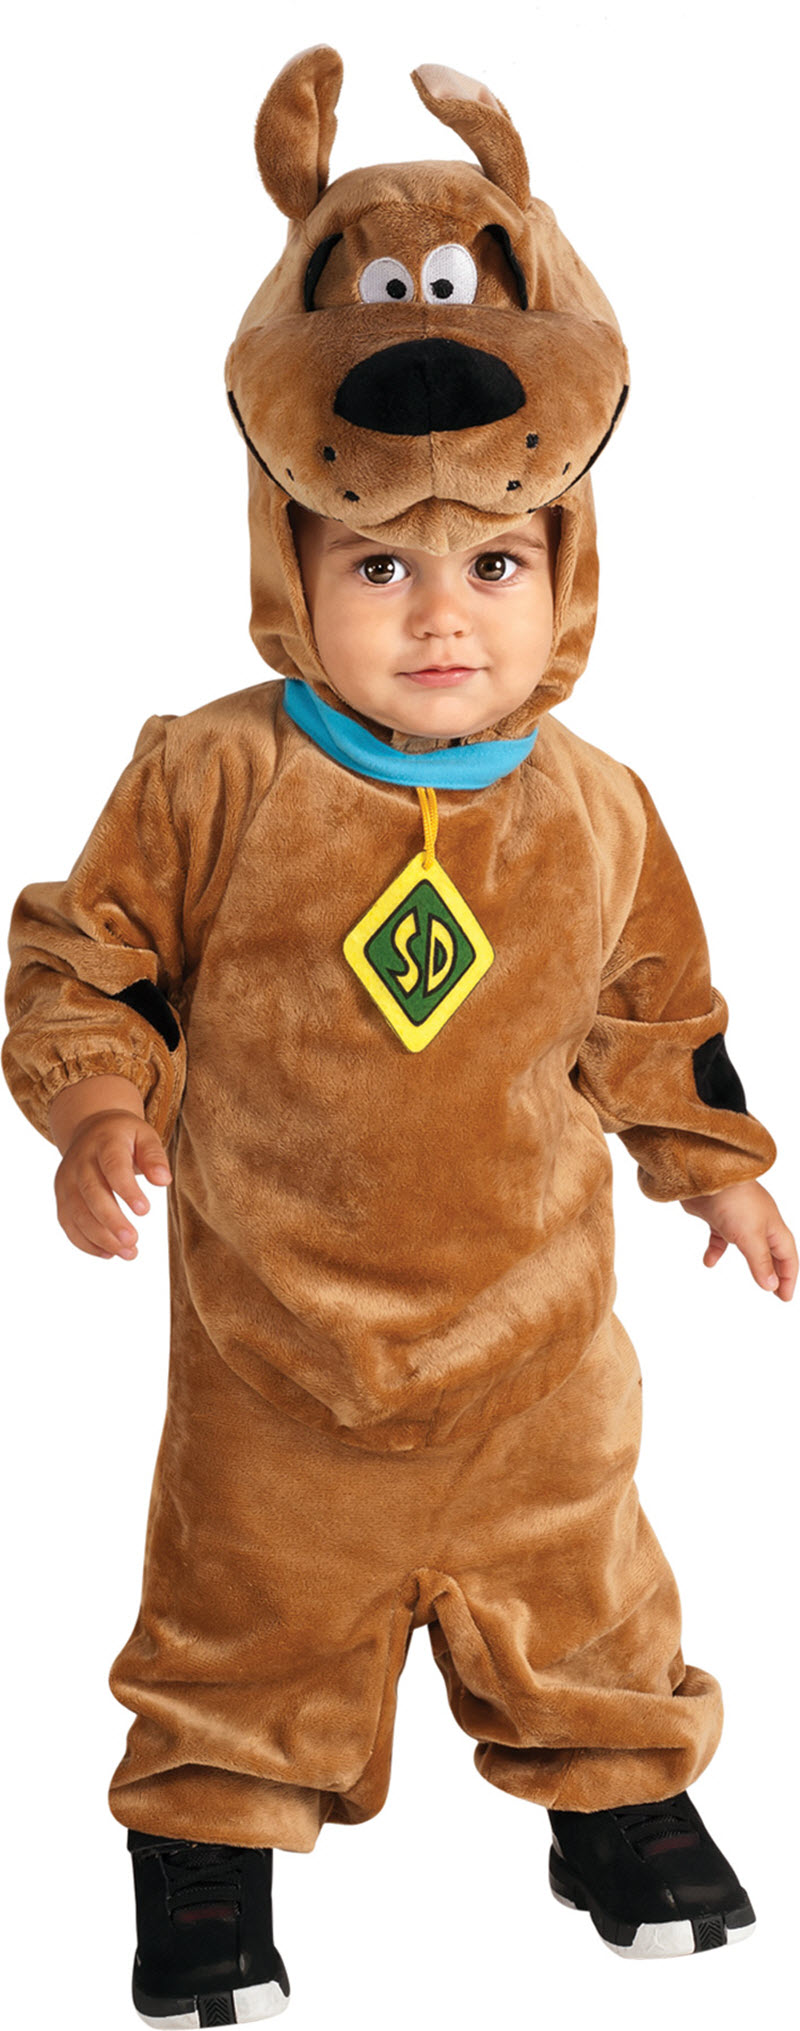 Scooby-Doo Scooby Doo Infant Costume